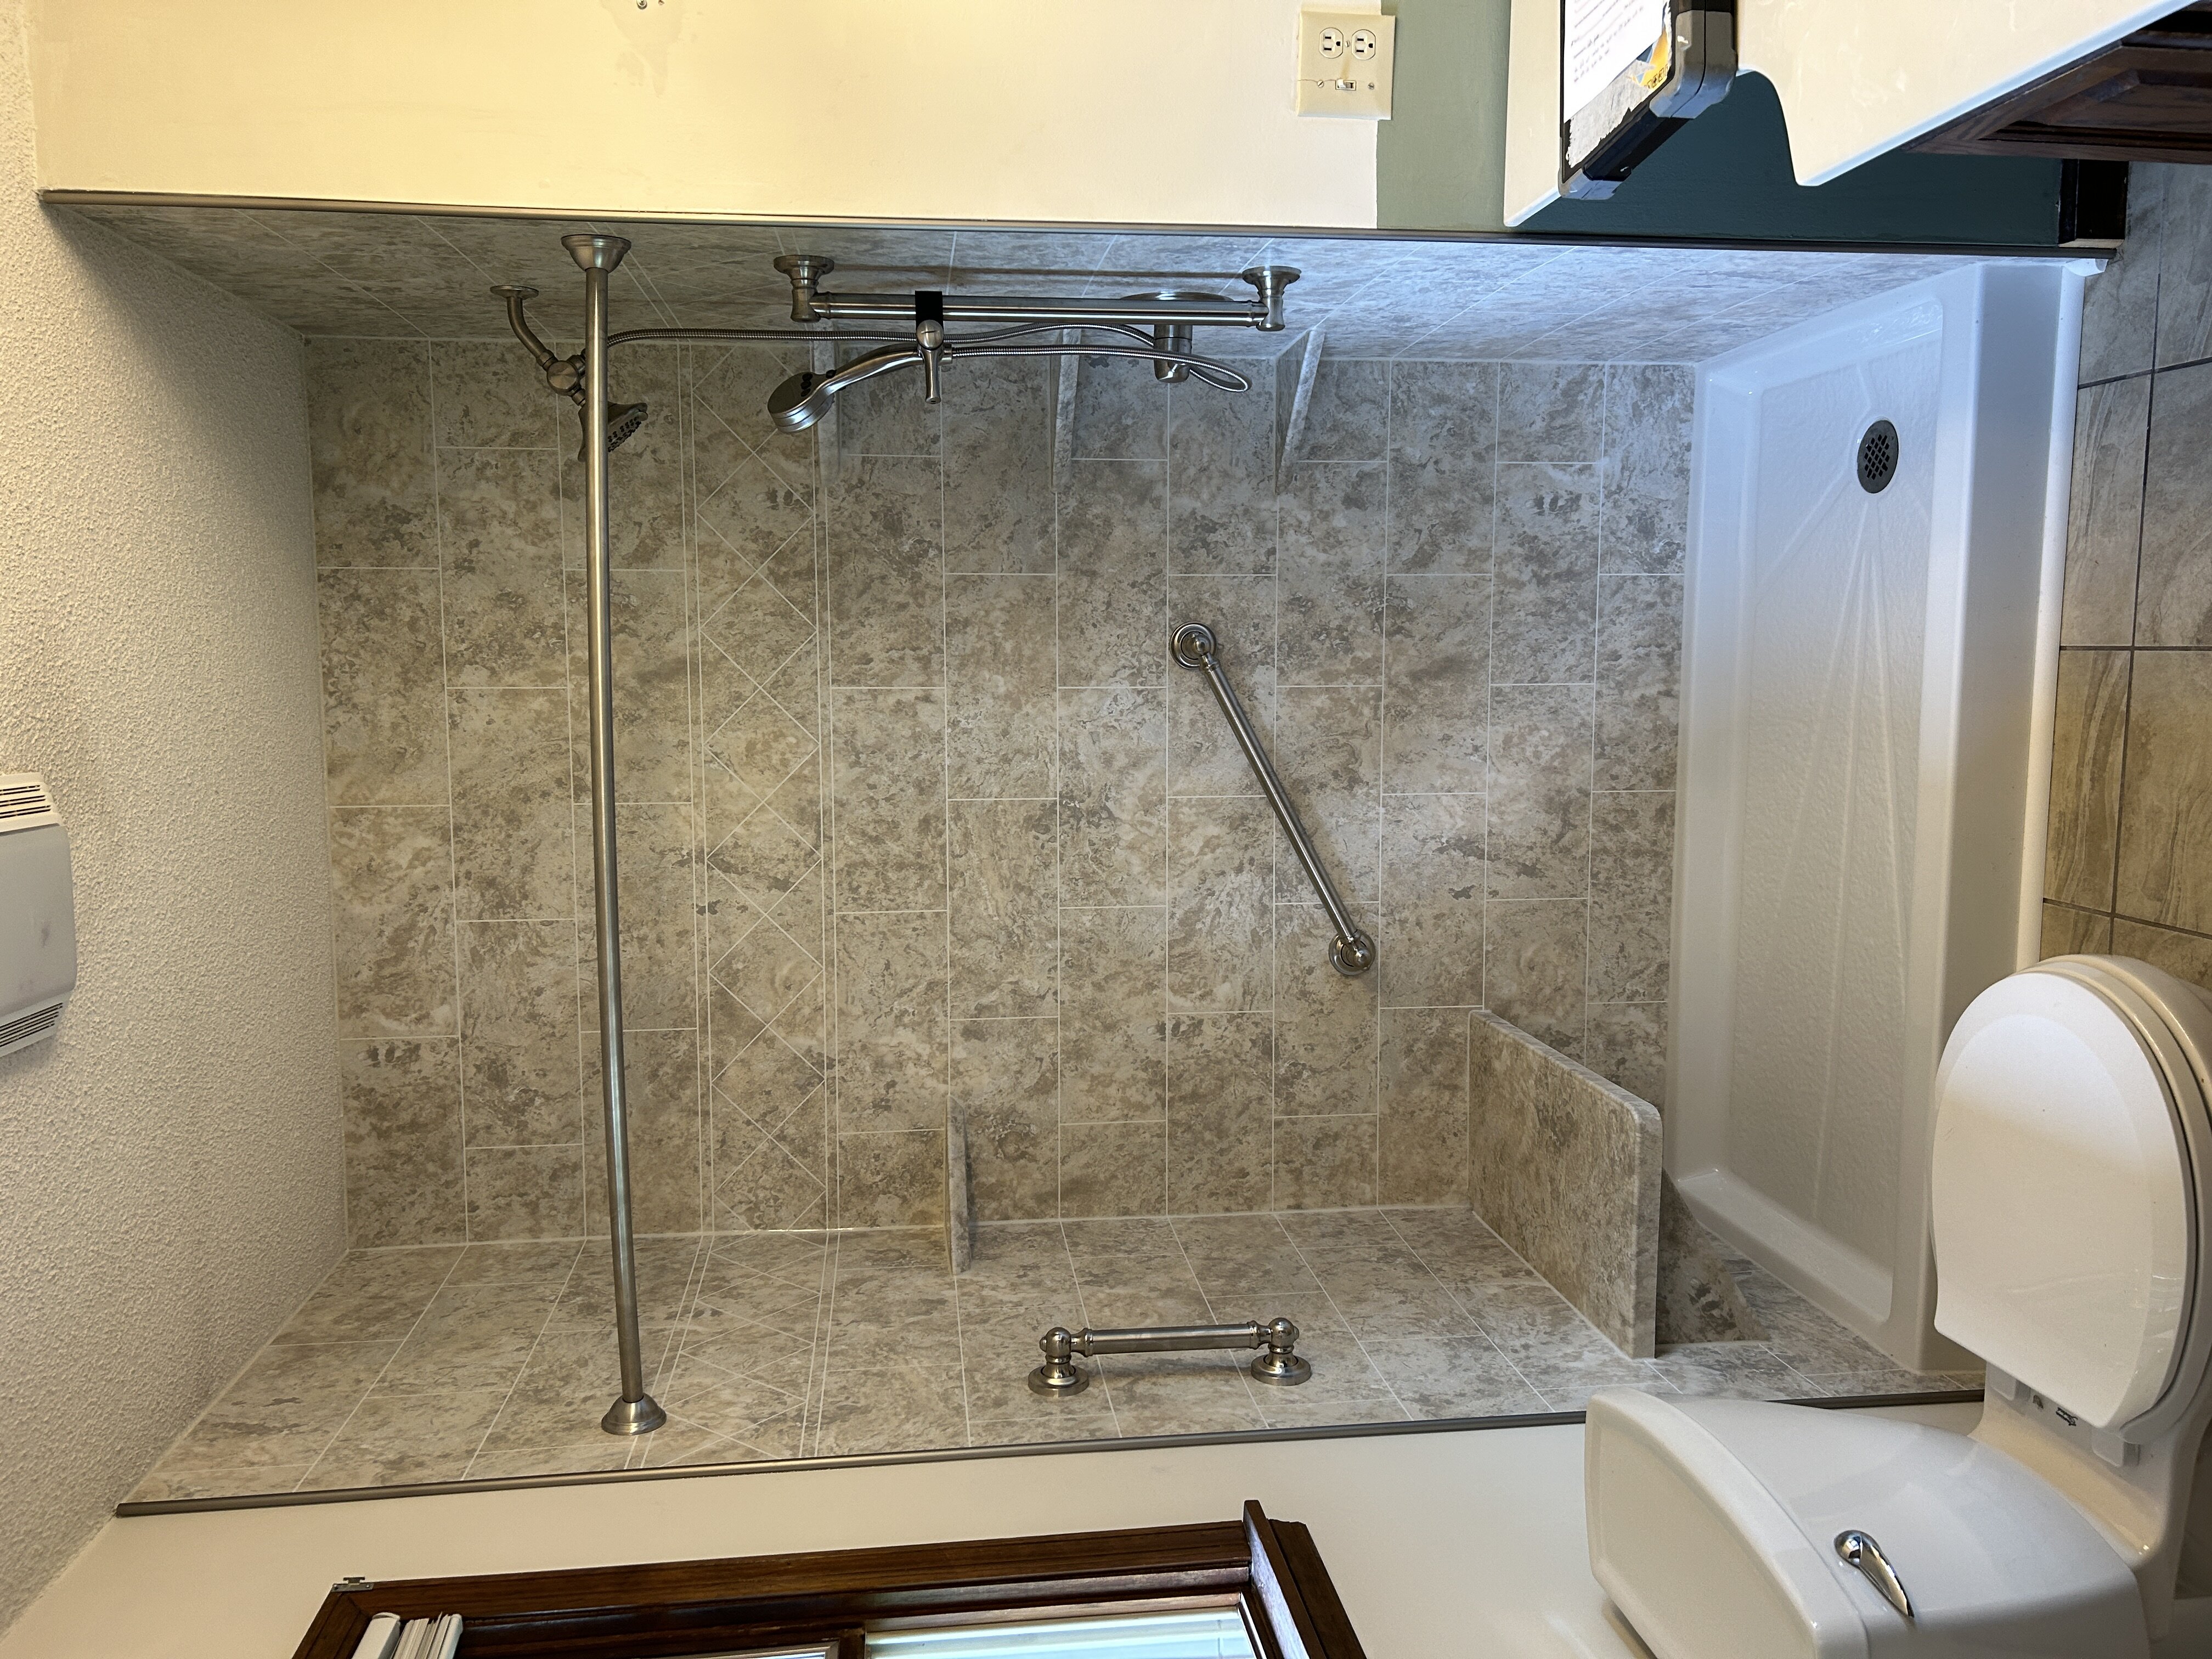 The new luxury walk-in shower installed